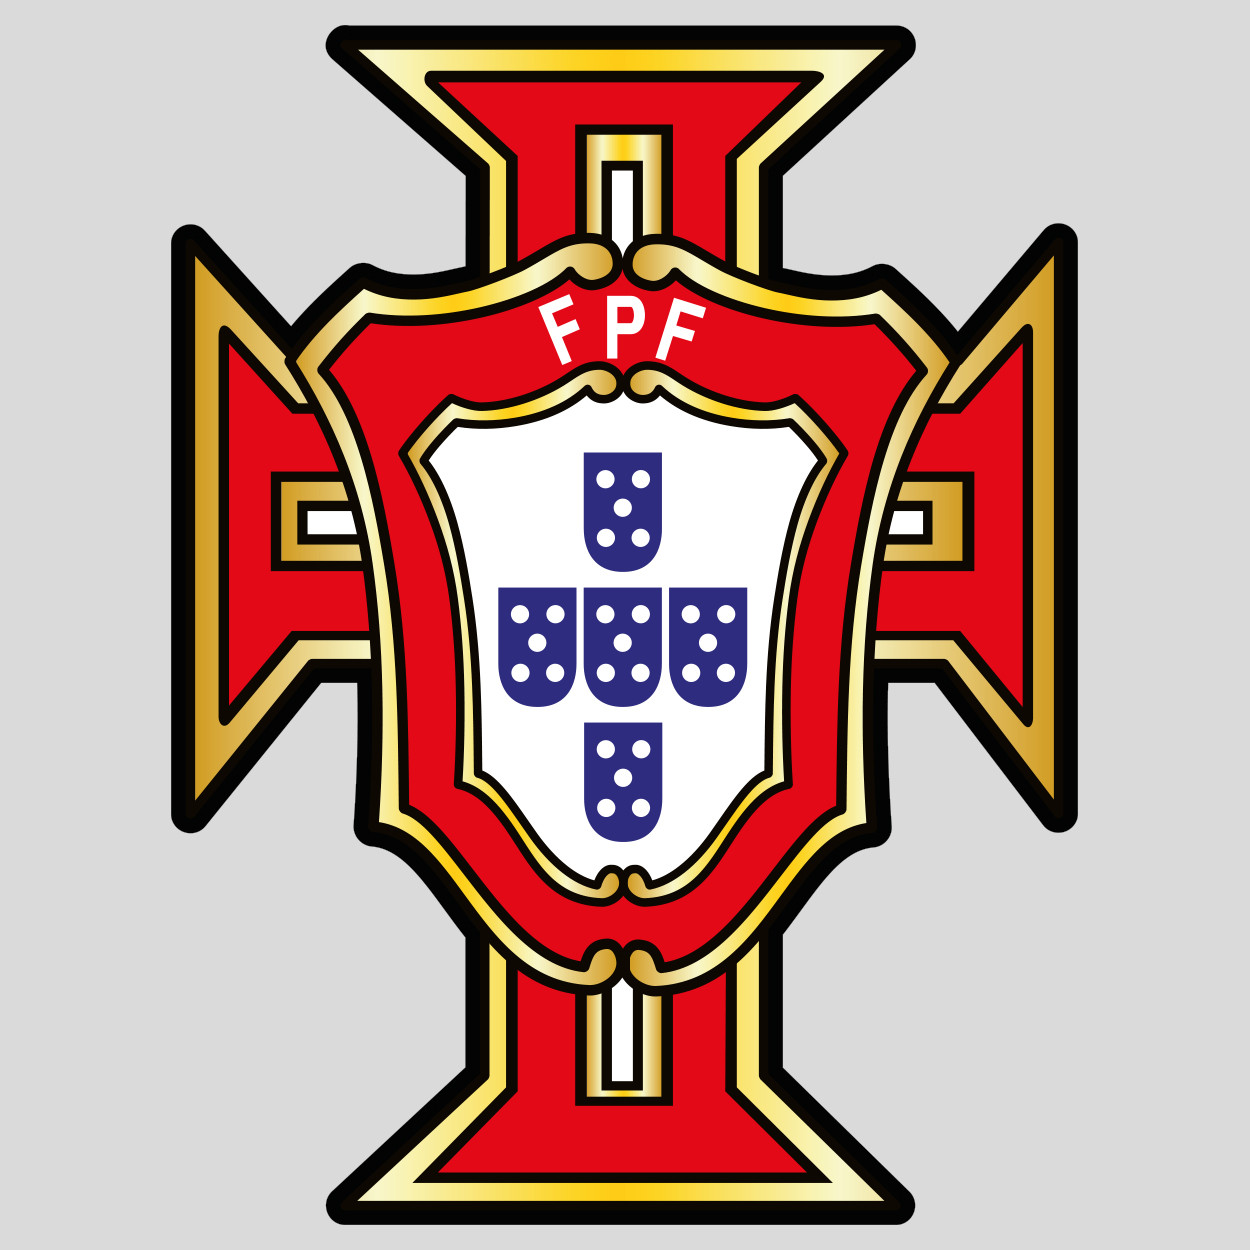 Stickers fpf portugal football - Des prix 50% moins cher qu'en magasin